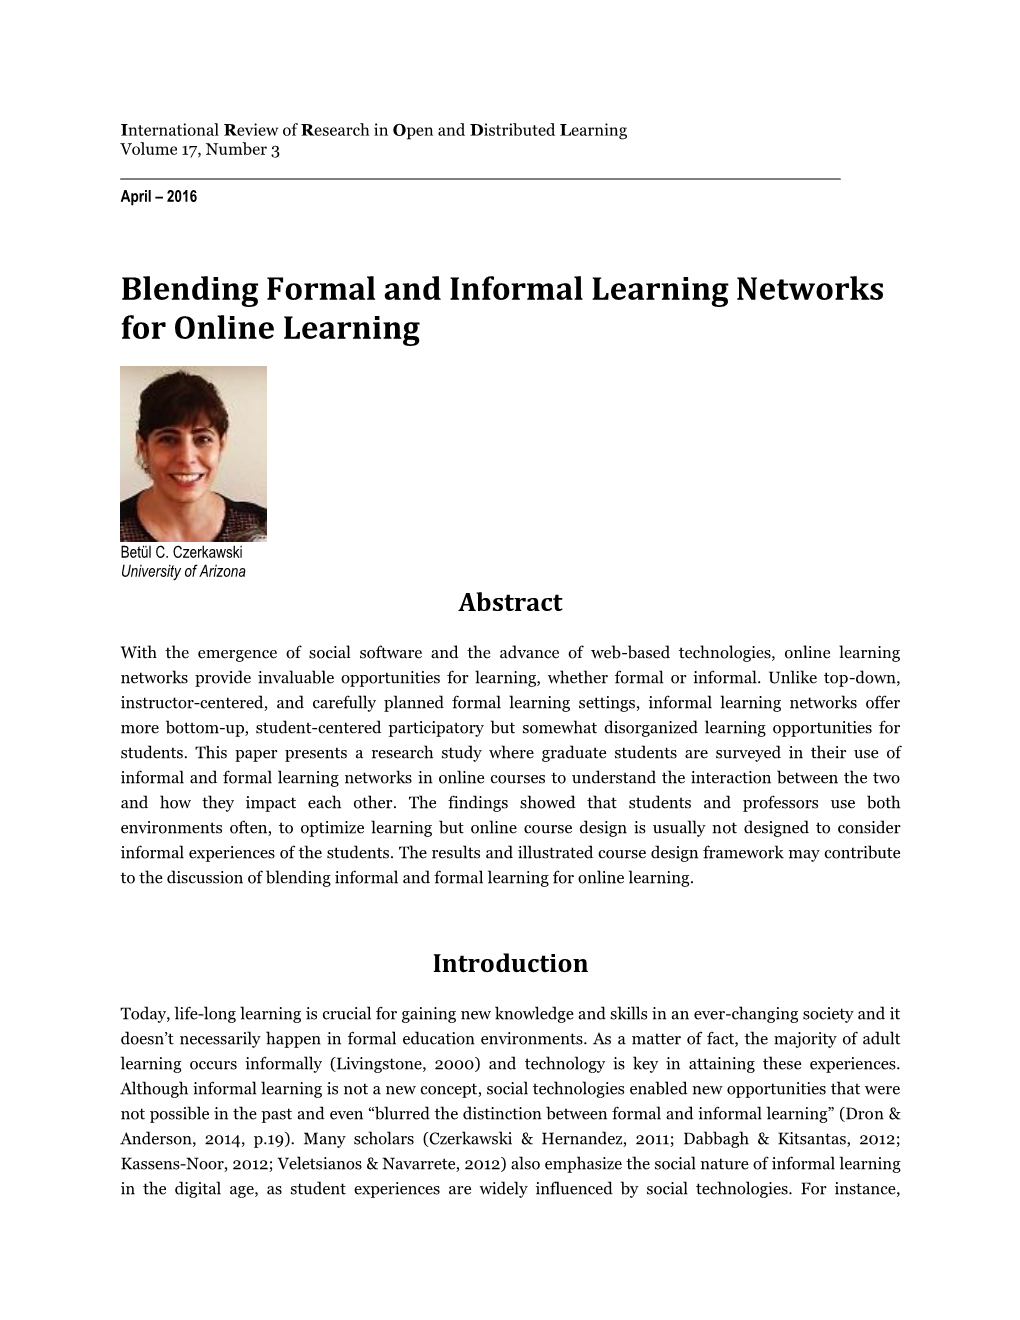 Blending Formal and Informal Learning Networks for Online Learning